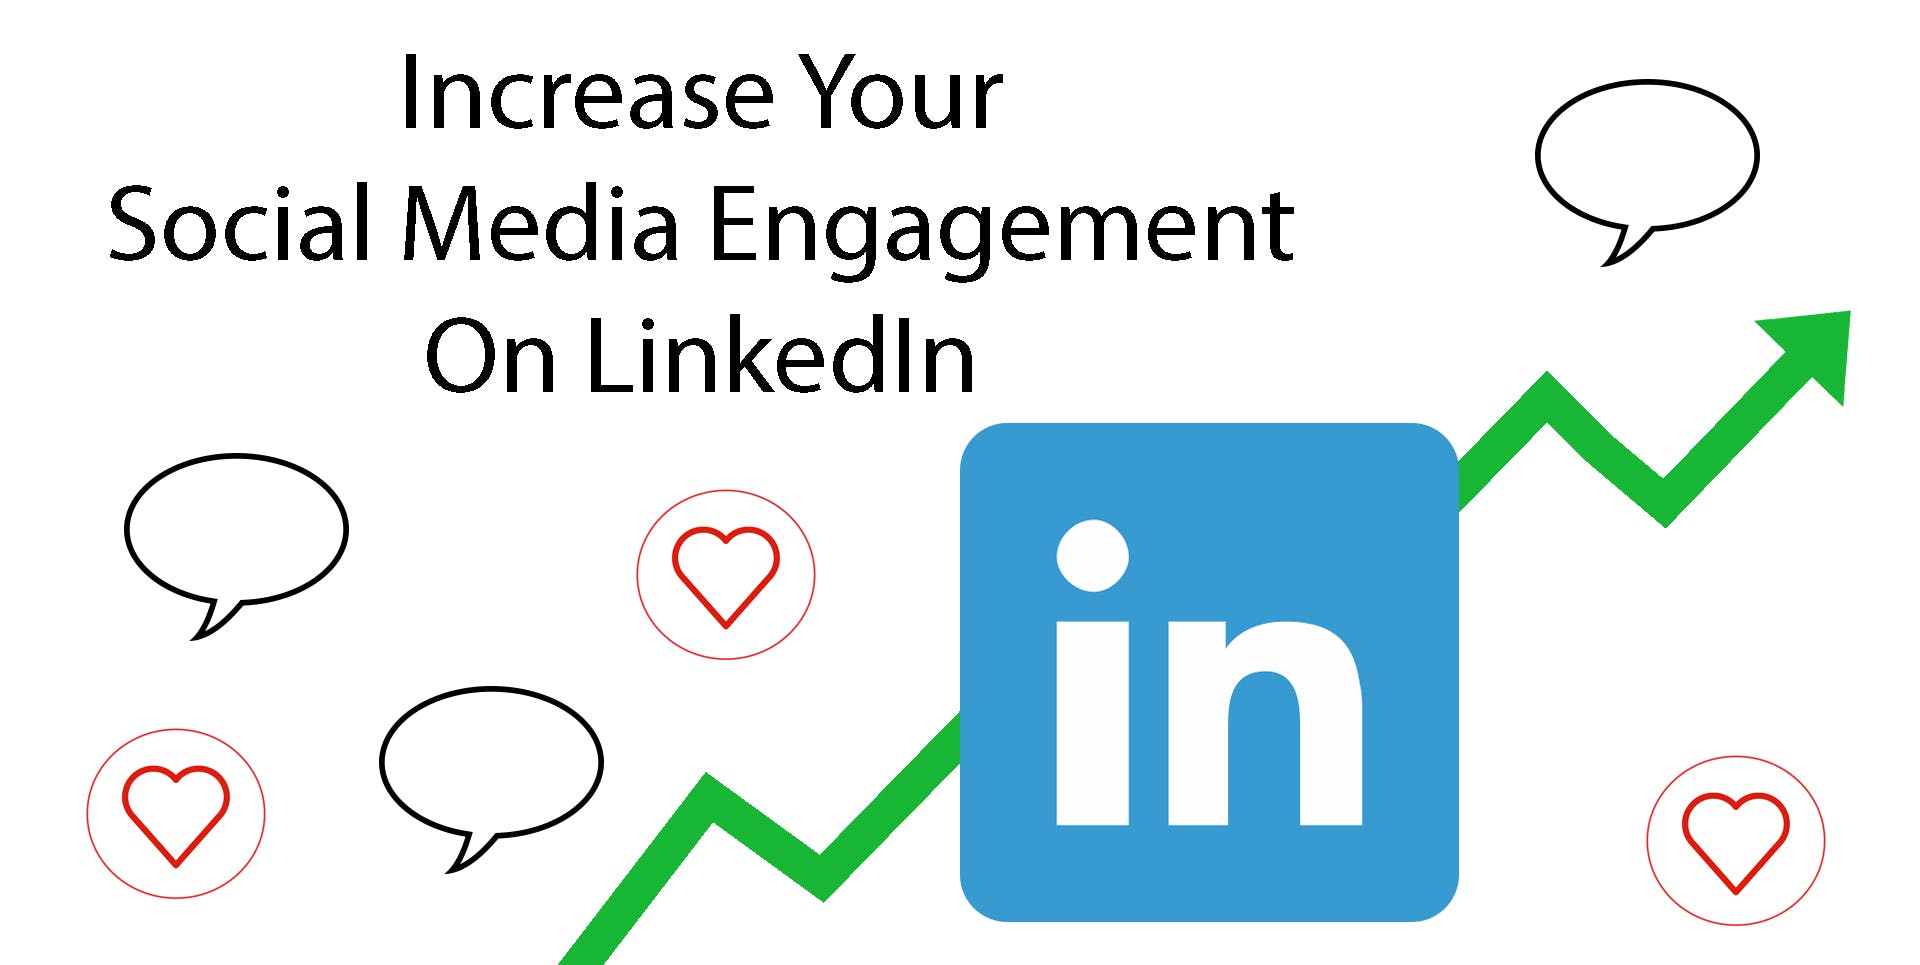 Increase engagement on LinkedIn